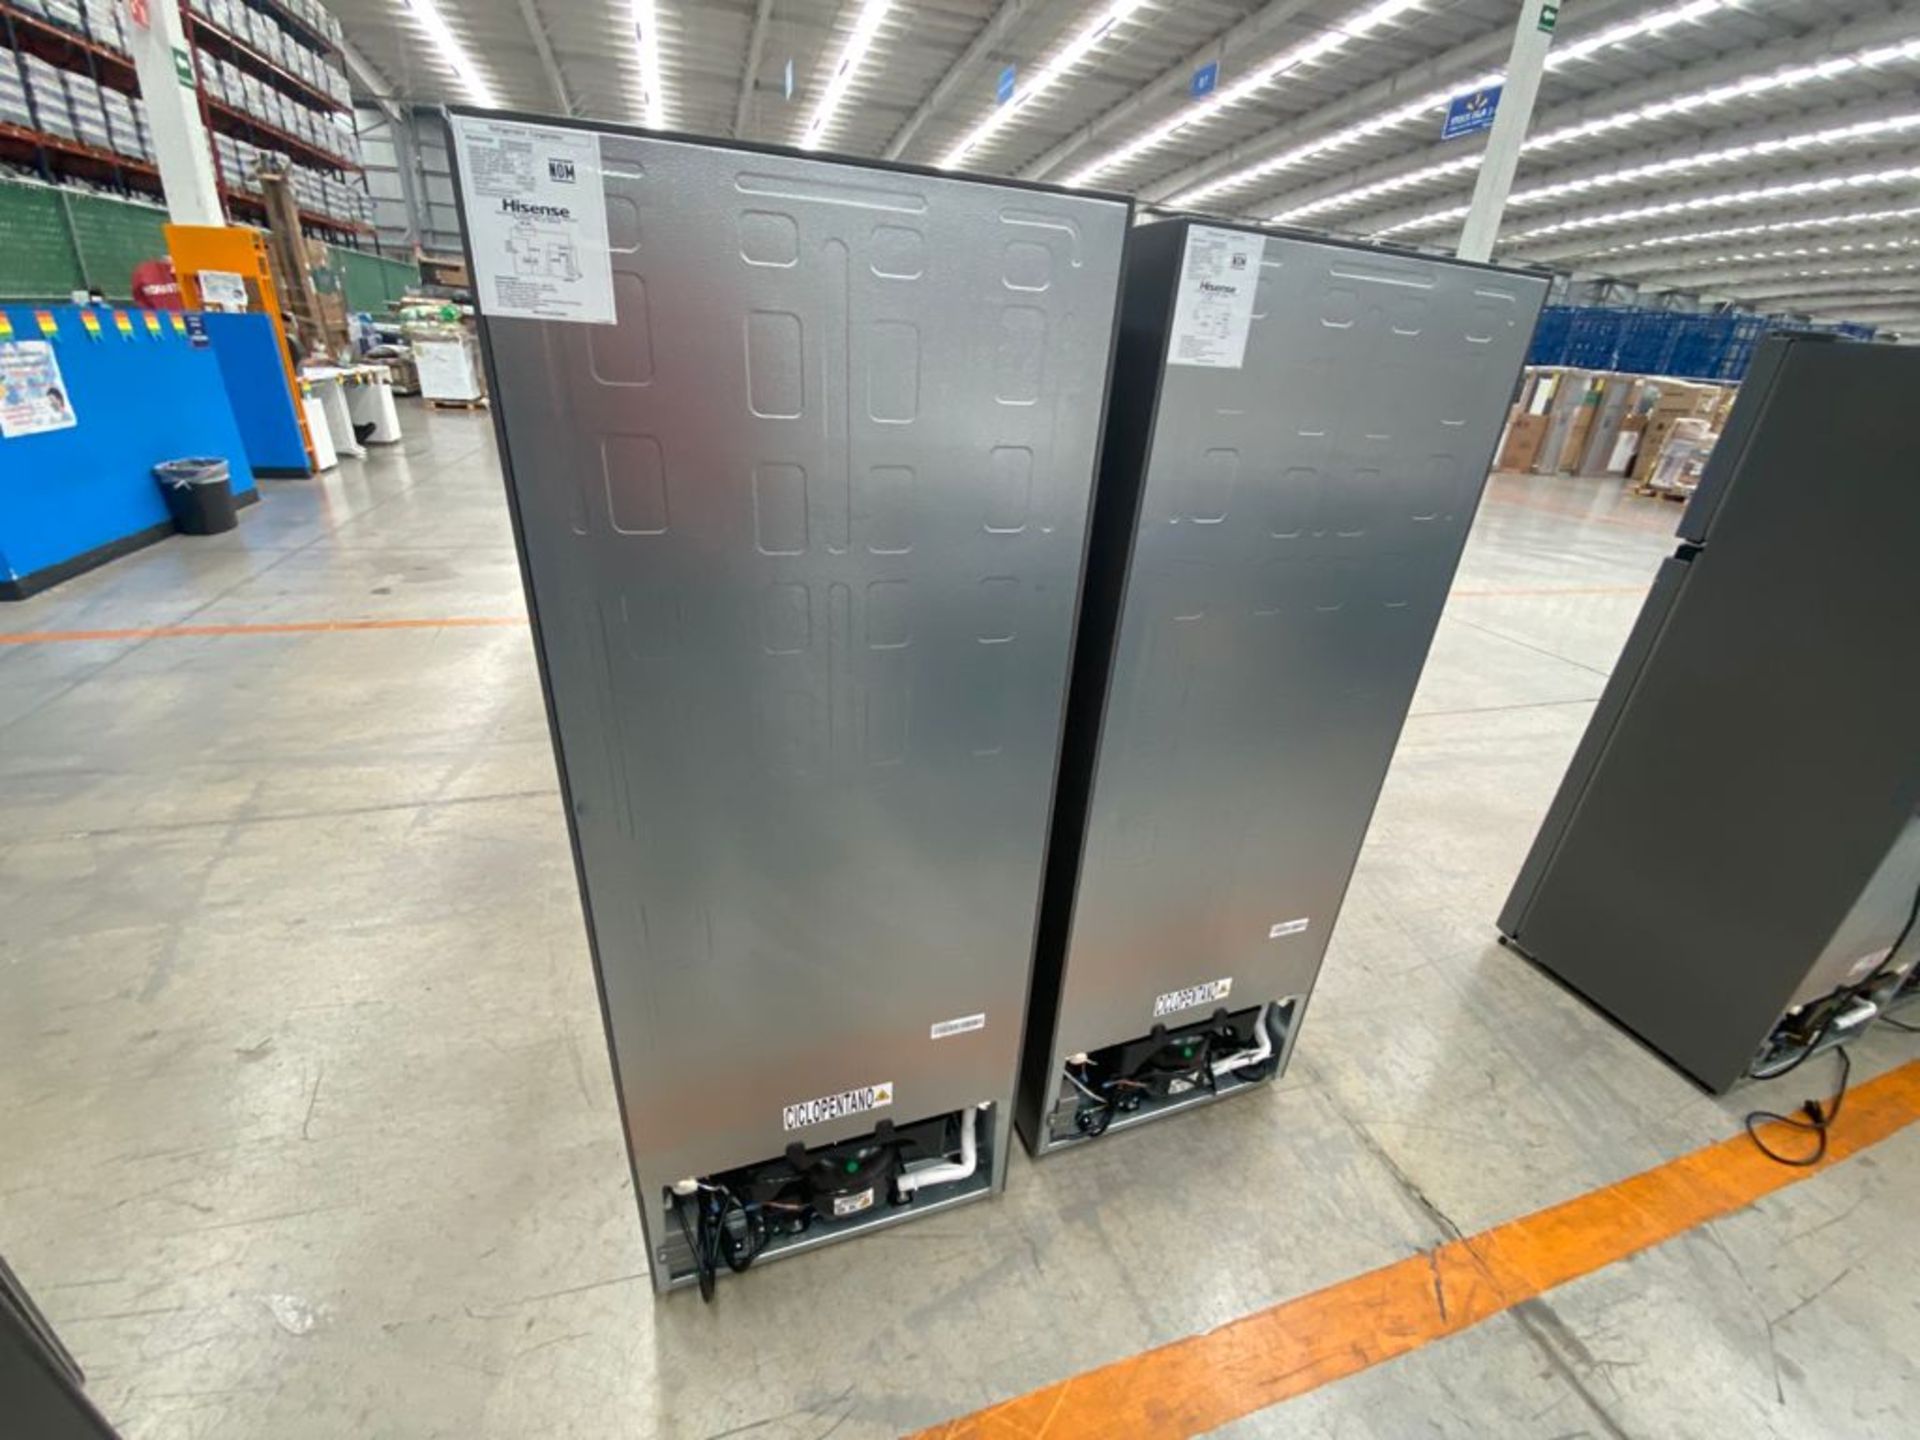 2 Refrigeradores marca Hisense color gris modelo RT80D6AWX - Image 8 of 28